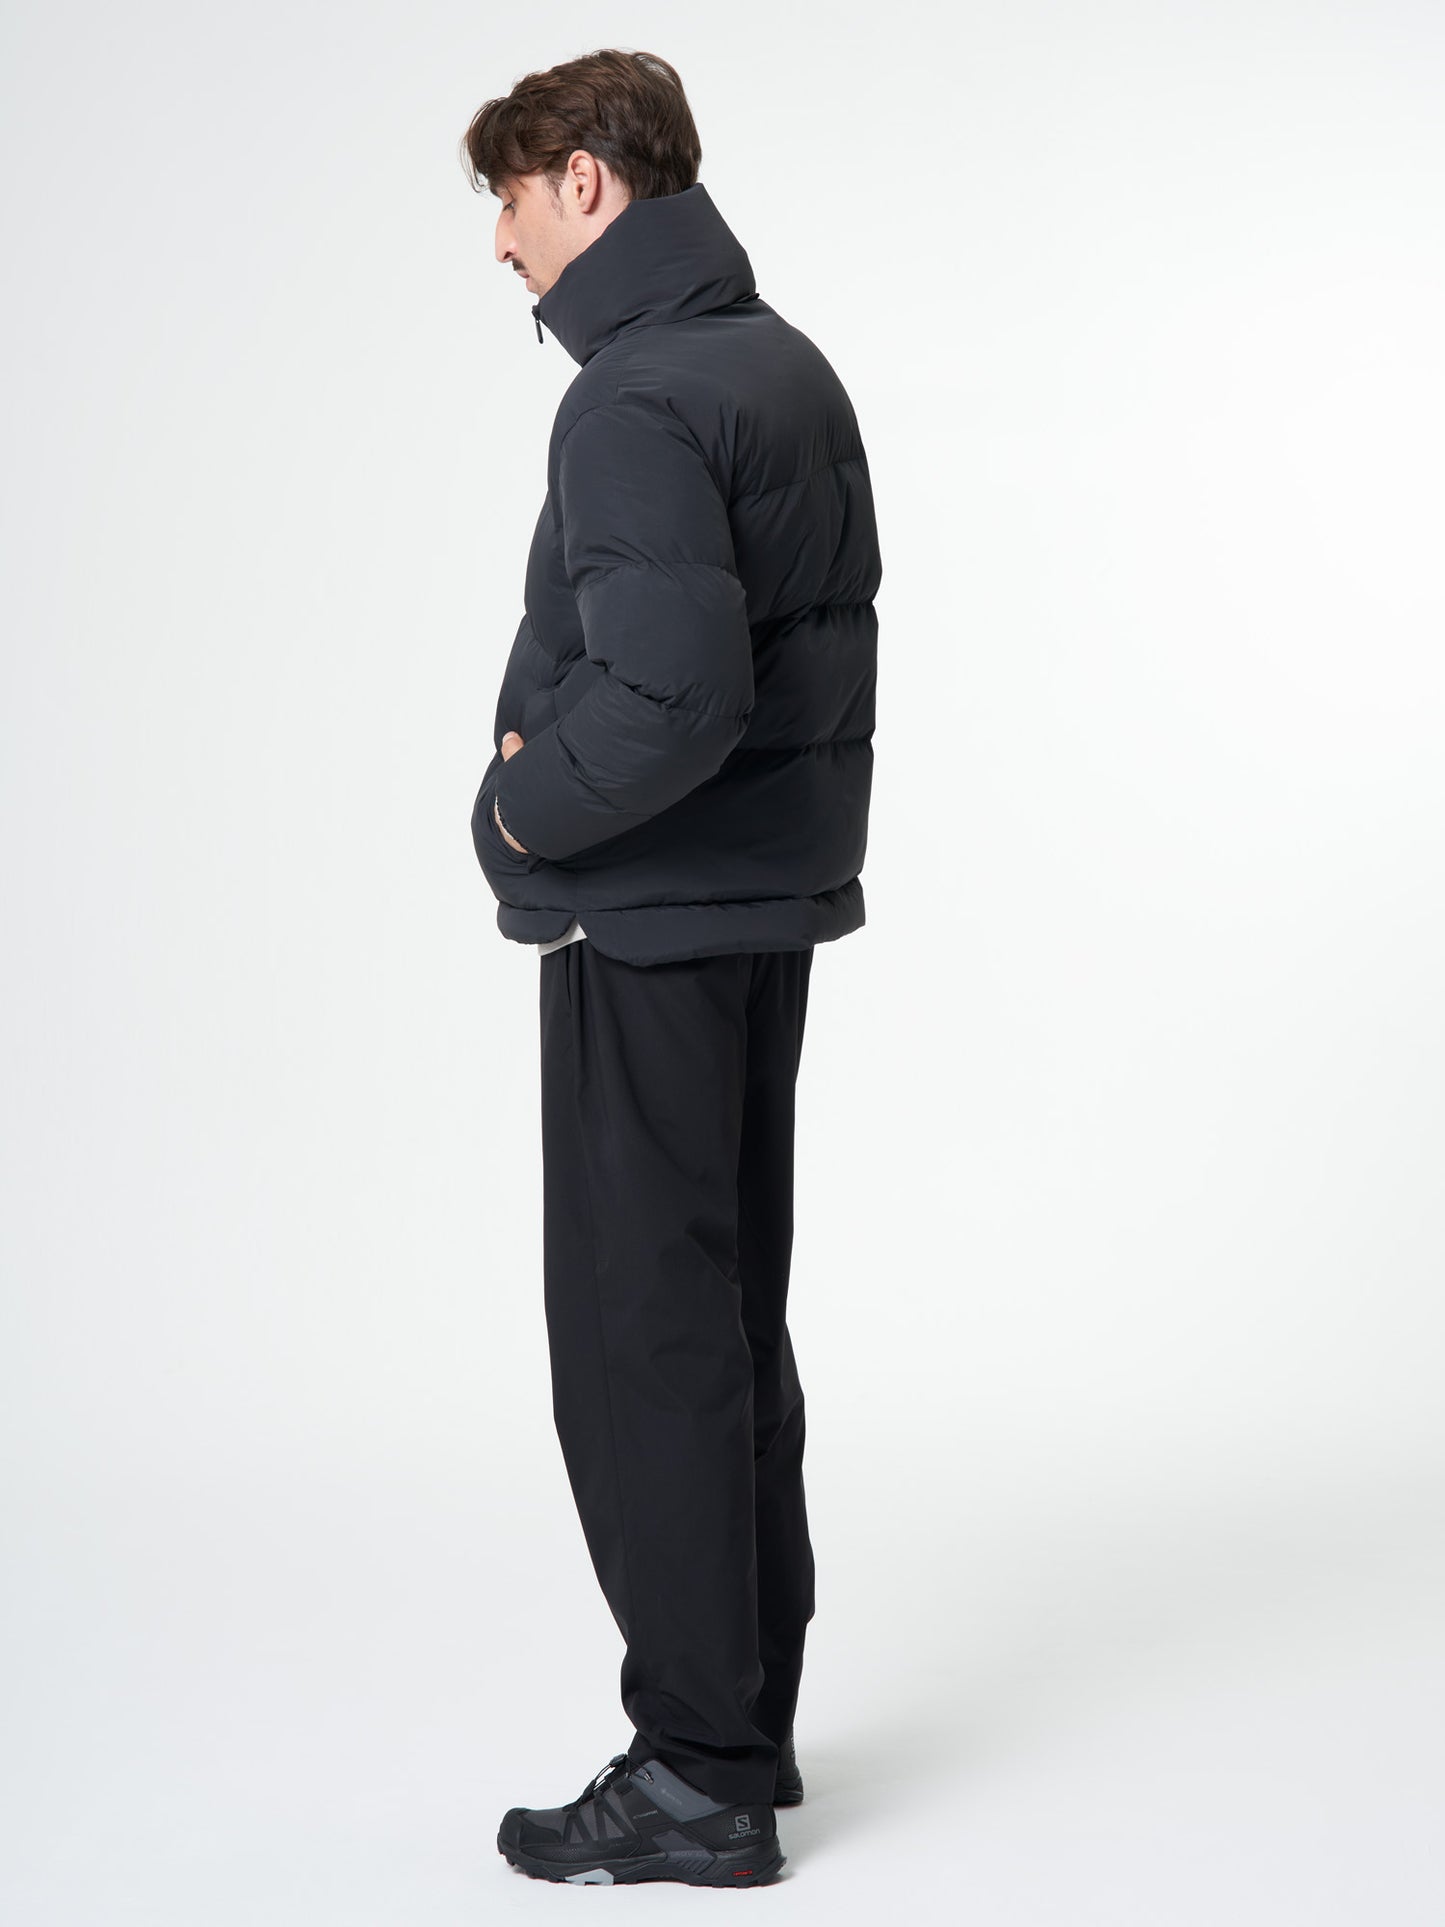 pinqponq-Puffer-Jacket-Unisex-Peat-Black-model-side